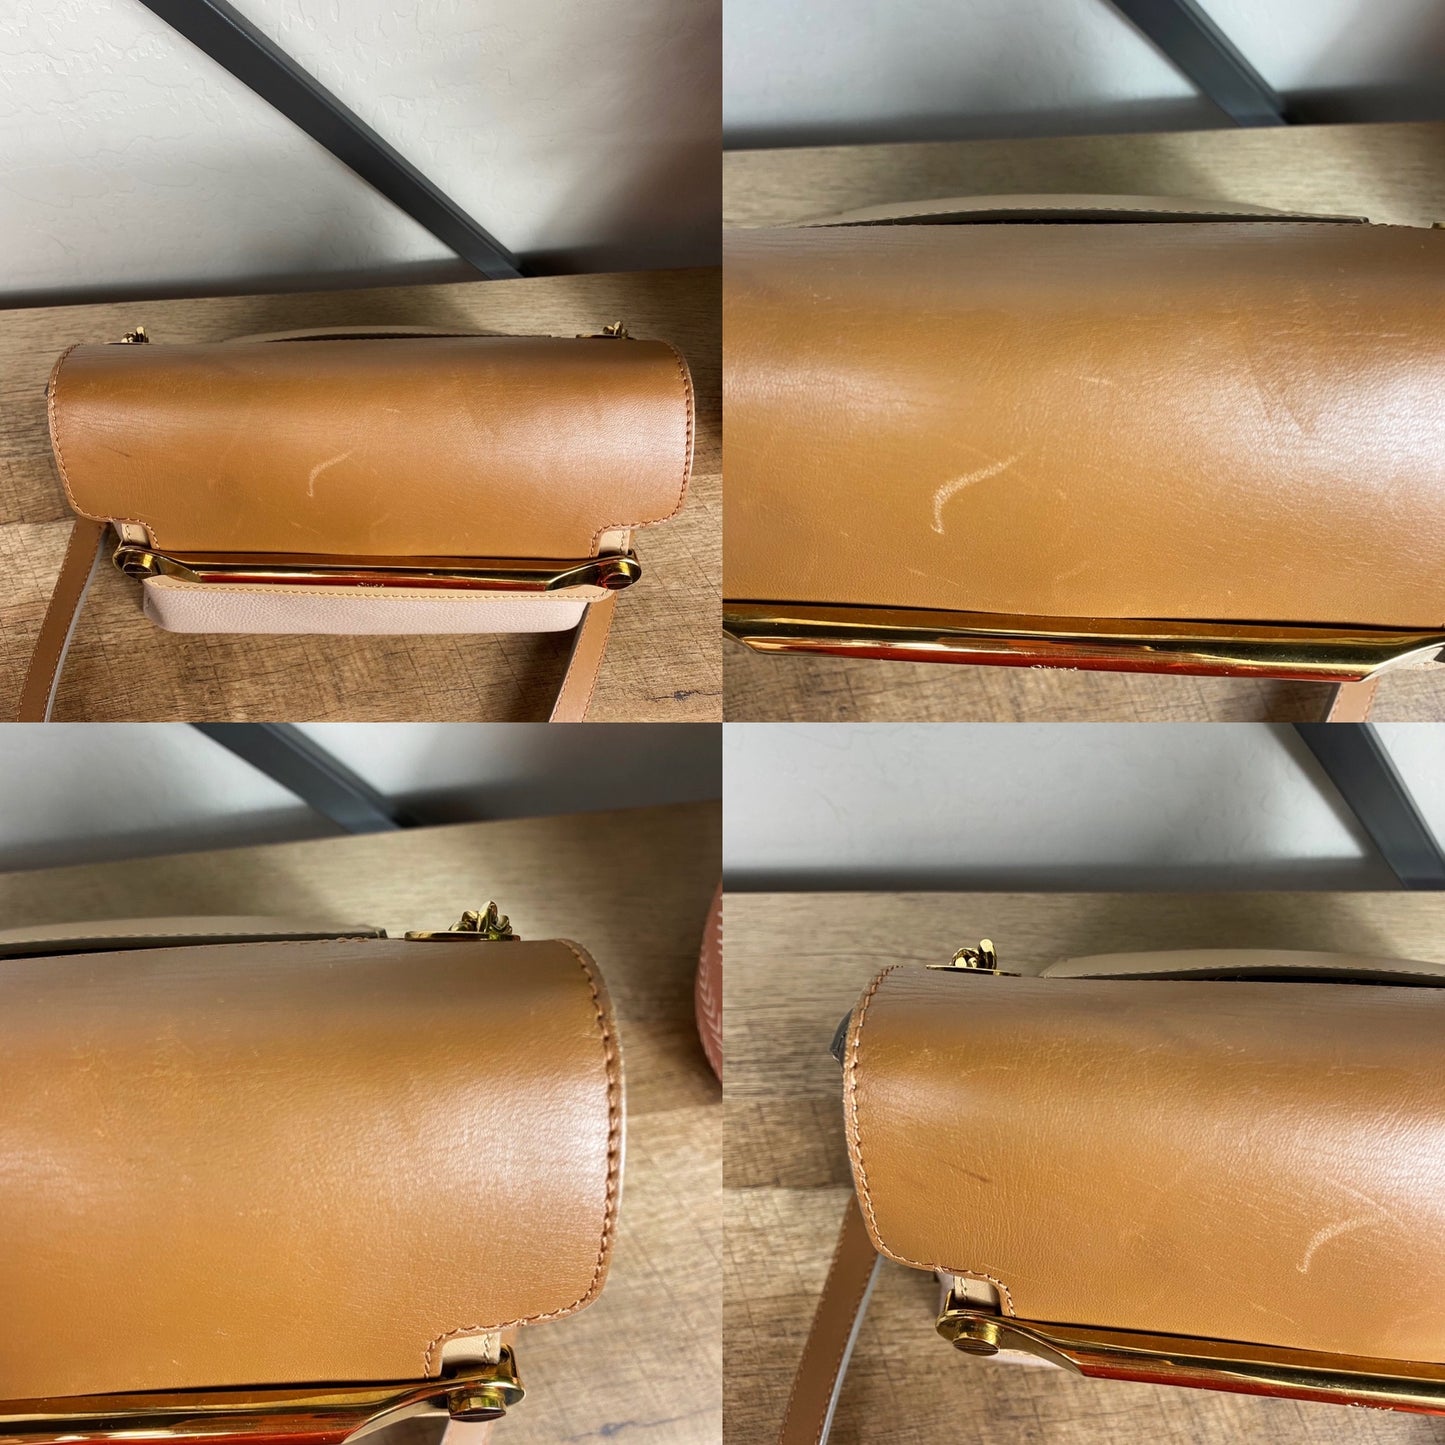 Chloé Medium Clare Leather Shoulder Bag